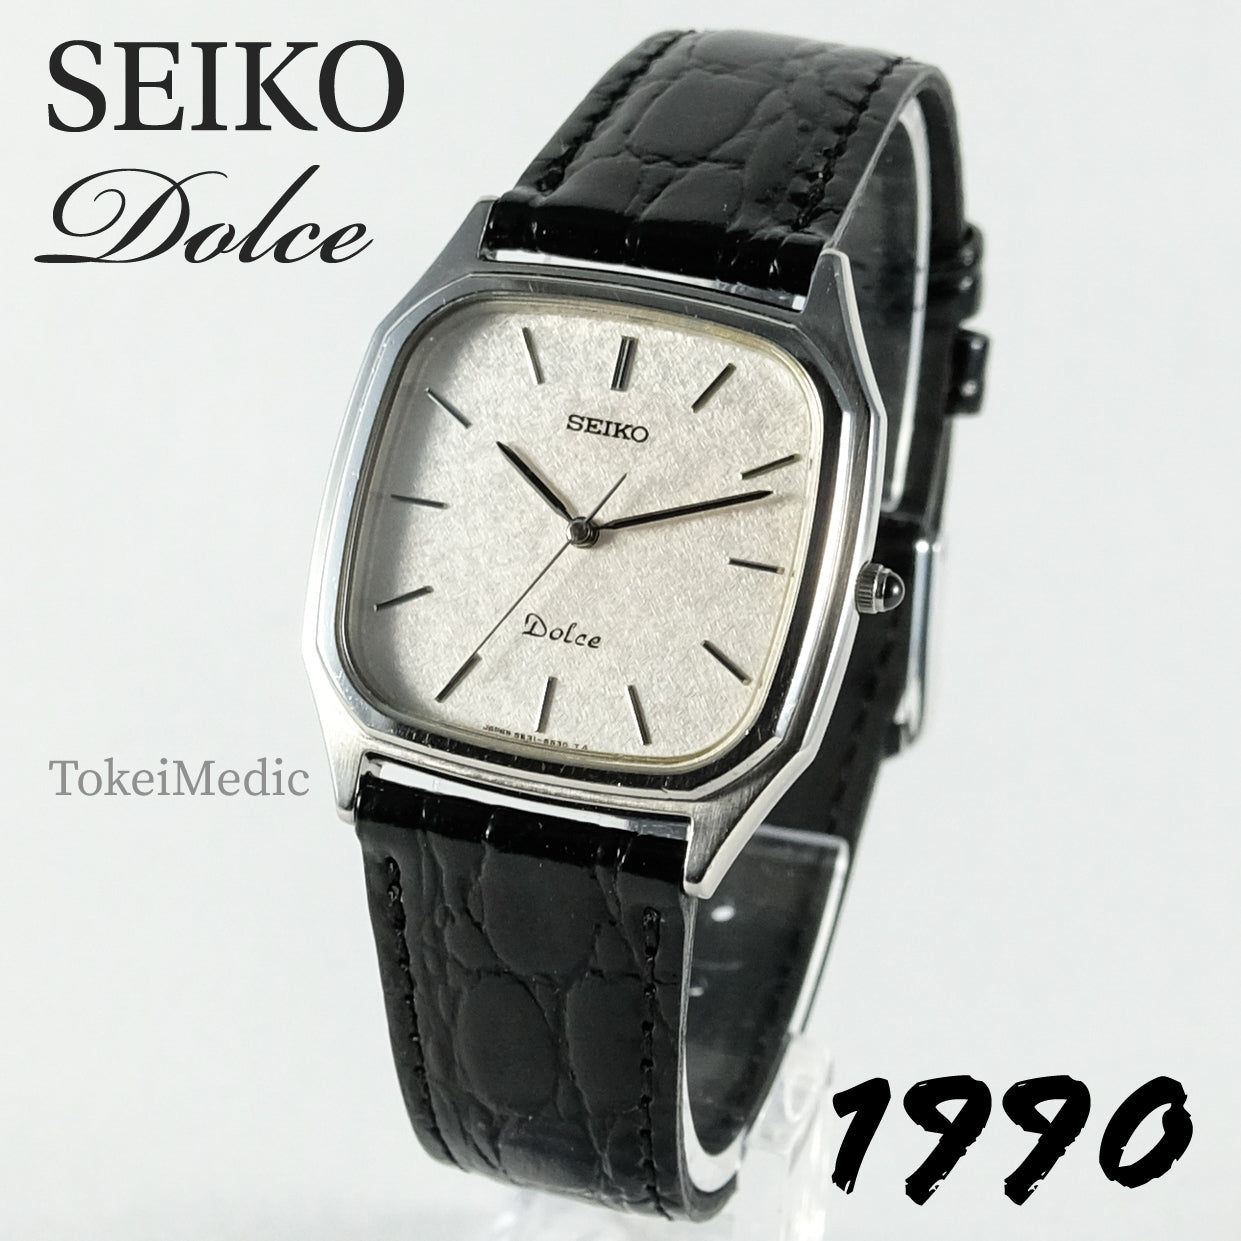 1990 Seiko Dolce 5E31-5B10